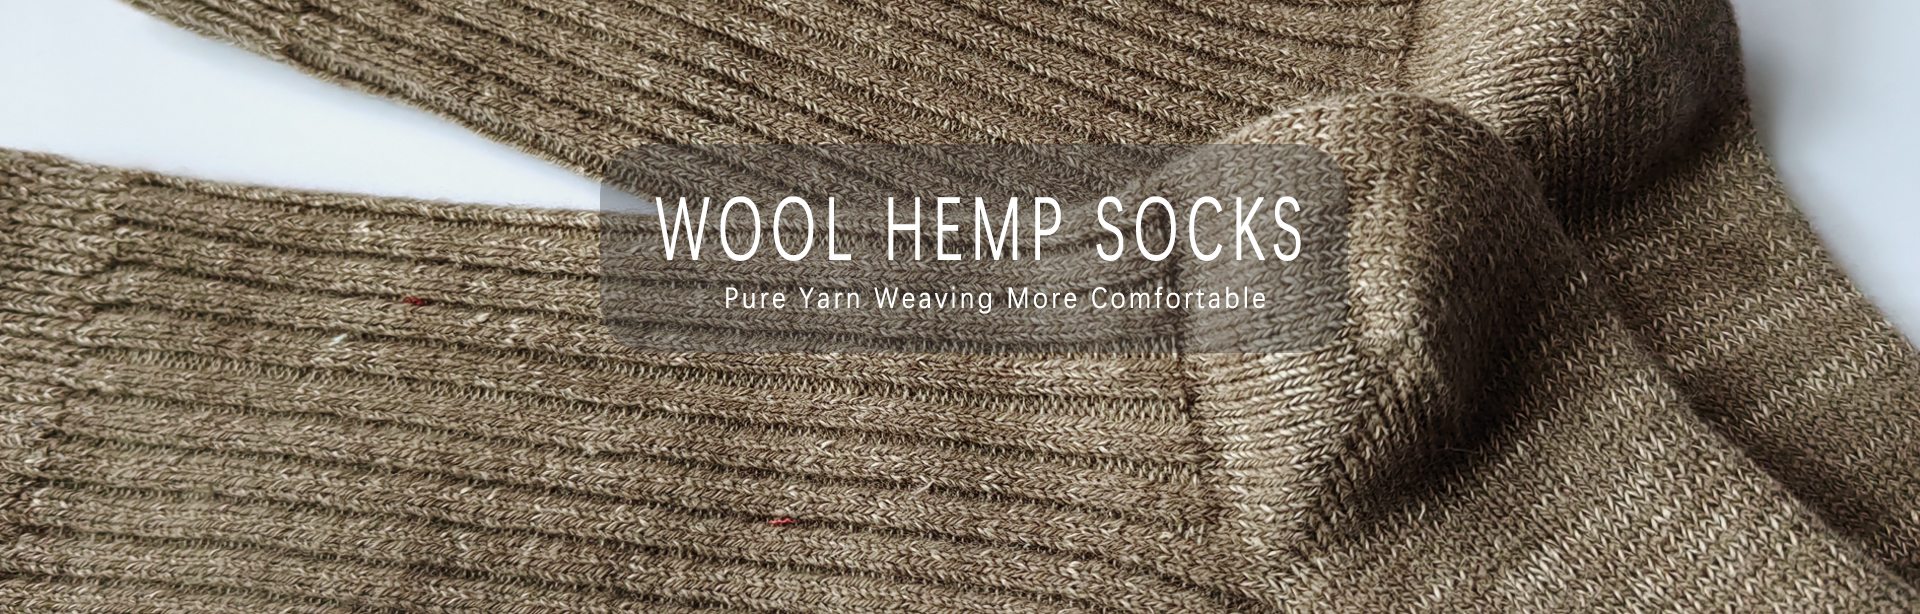 wool hemp socks